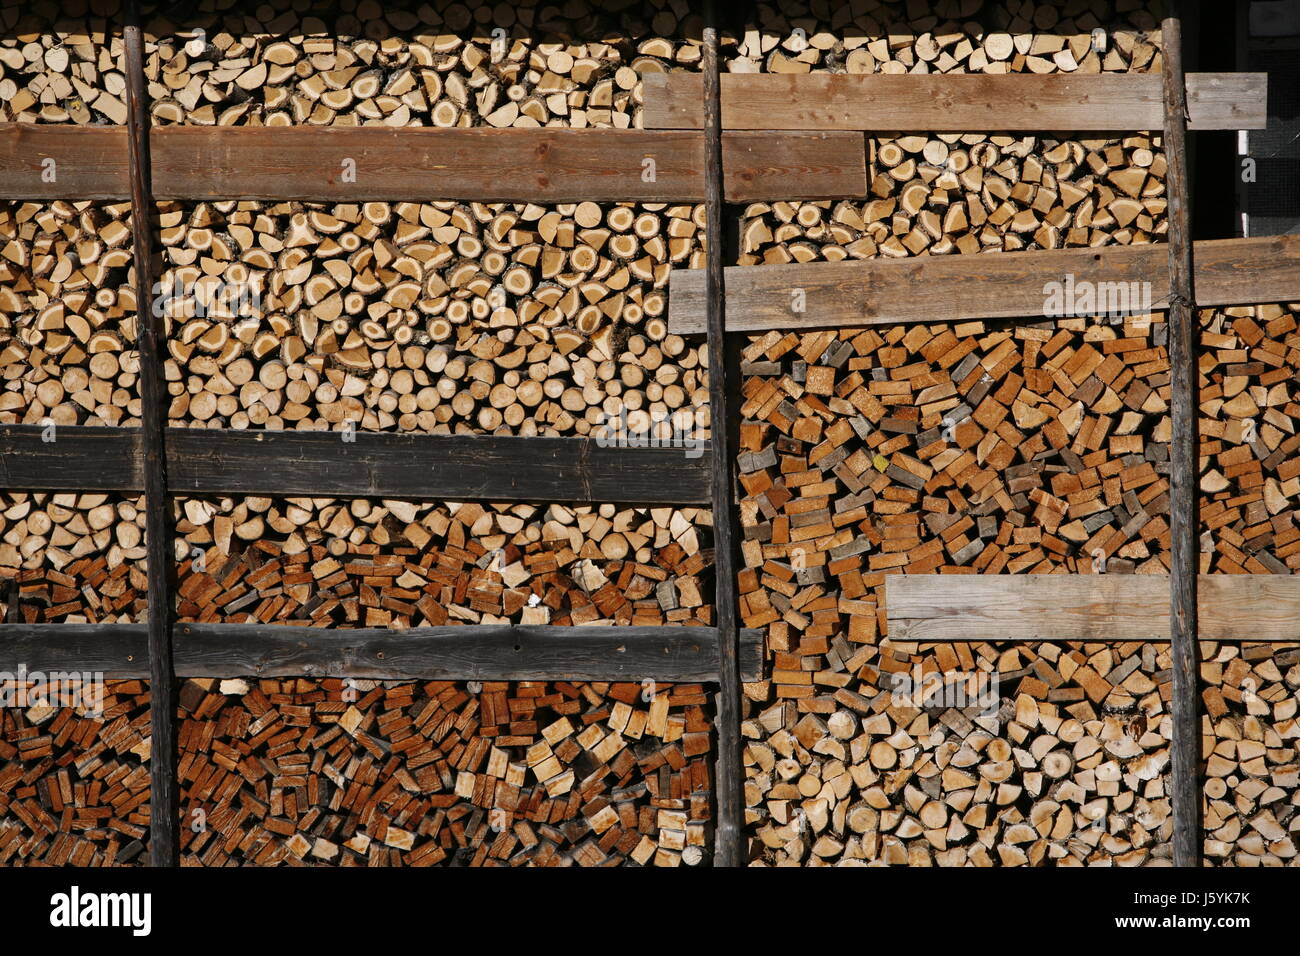 Holzstapel Brennholz halb auseinander Lager Bestimmung Halterung Log Holz Lager Lager der Stockfoto